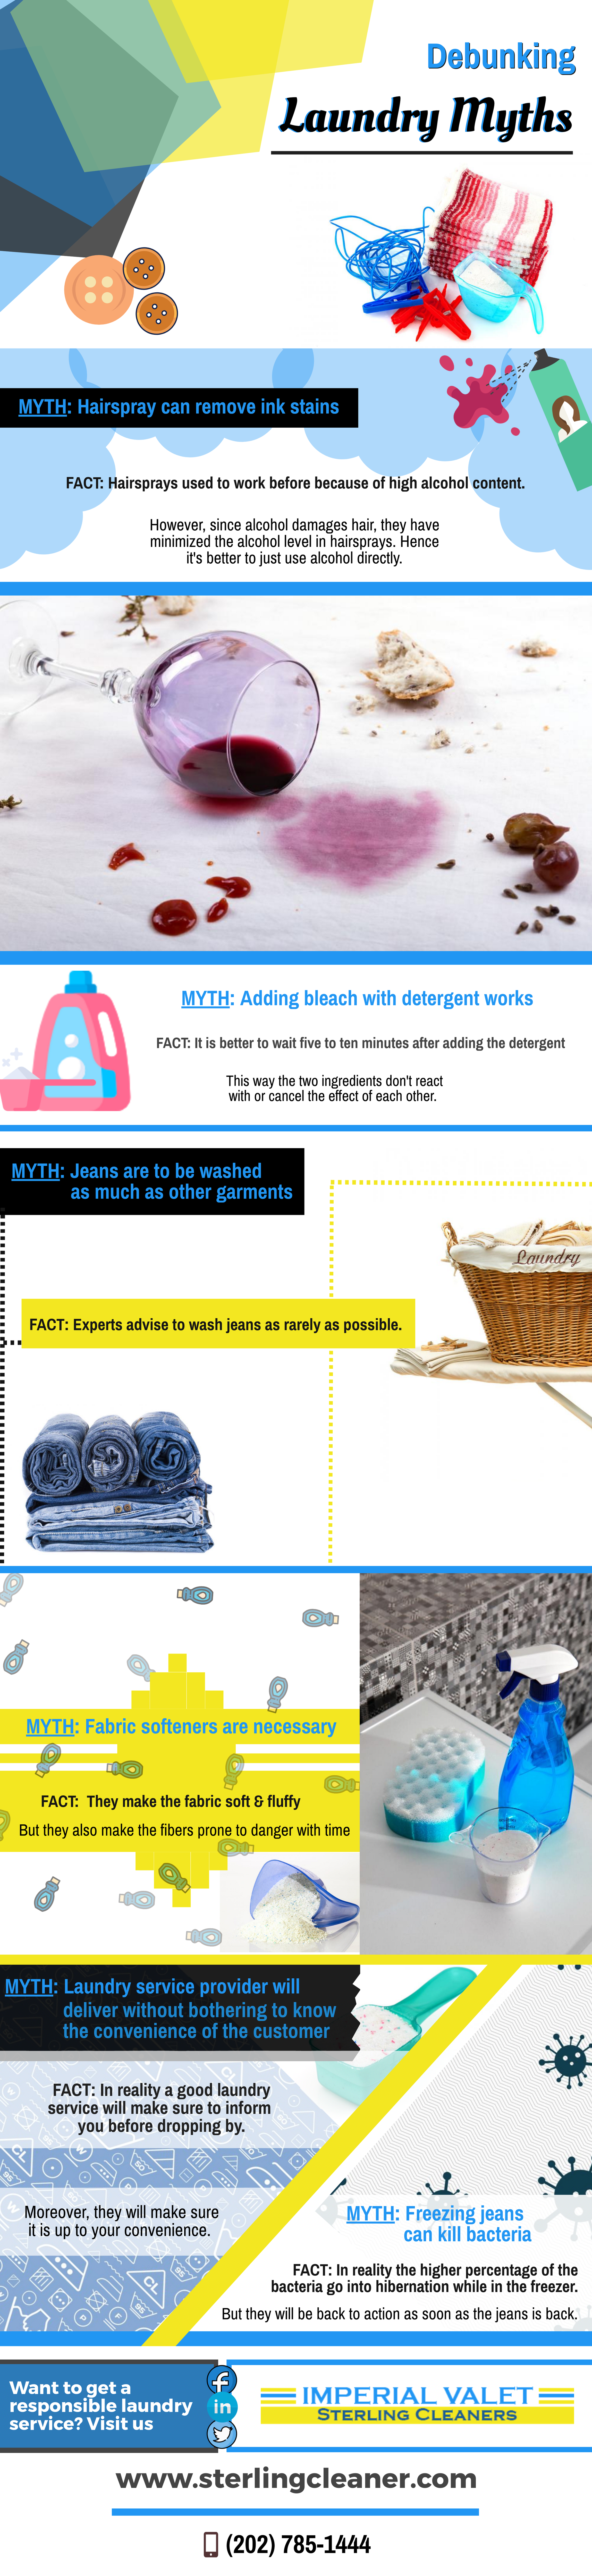 Debunking Laundry Myths